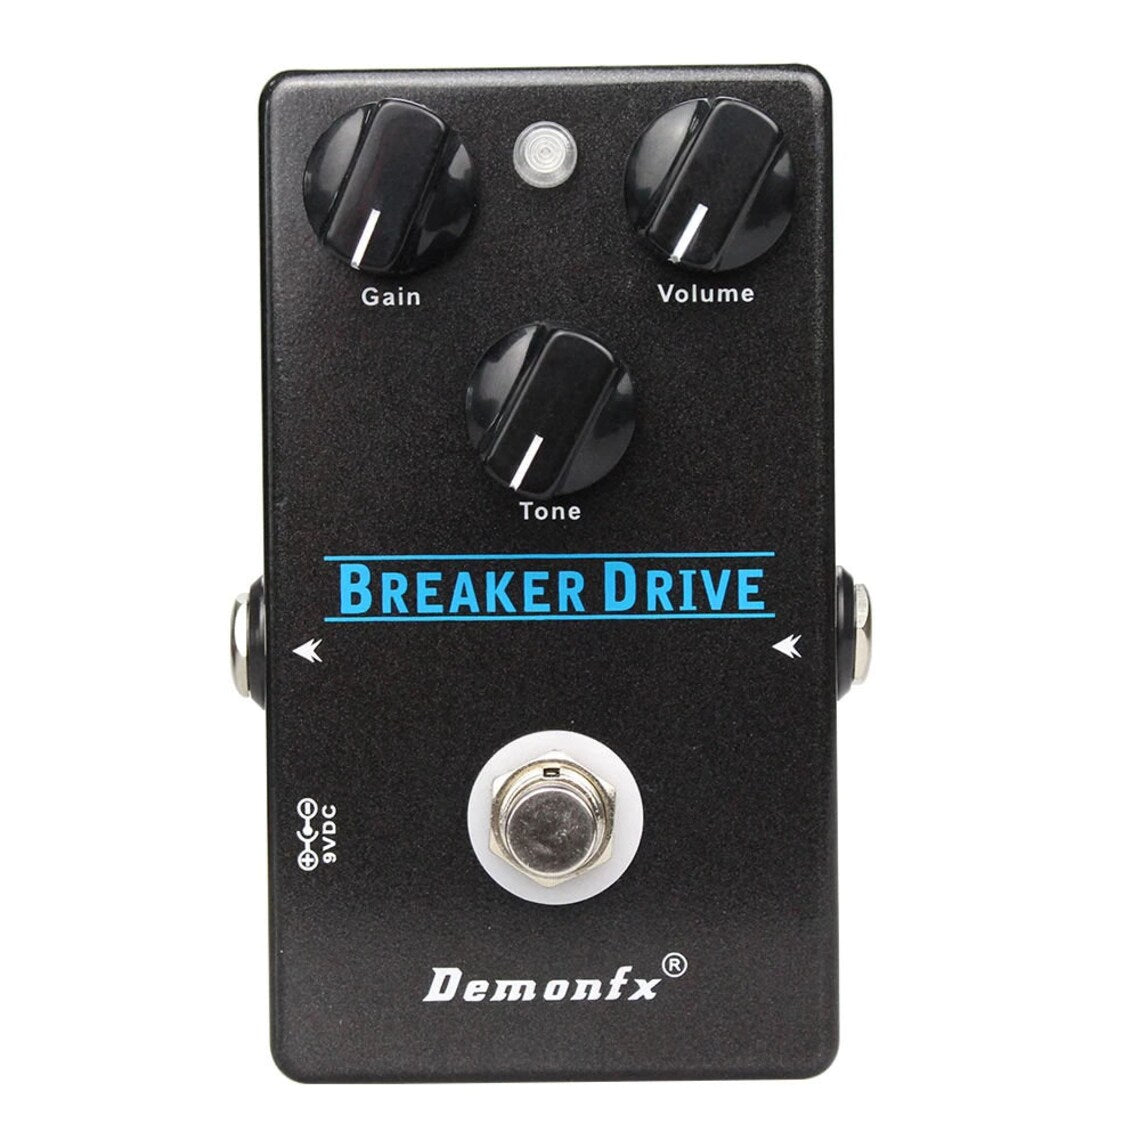 DemonFx Breaker Drive Overdrive Bluesbreaker Clone Pedal